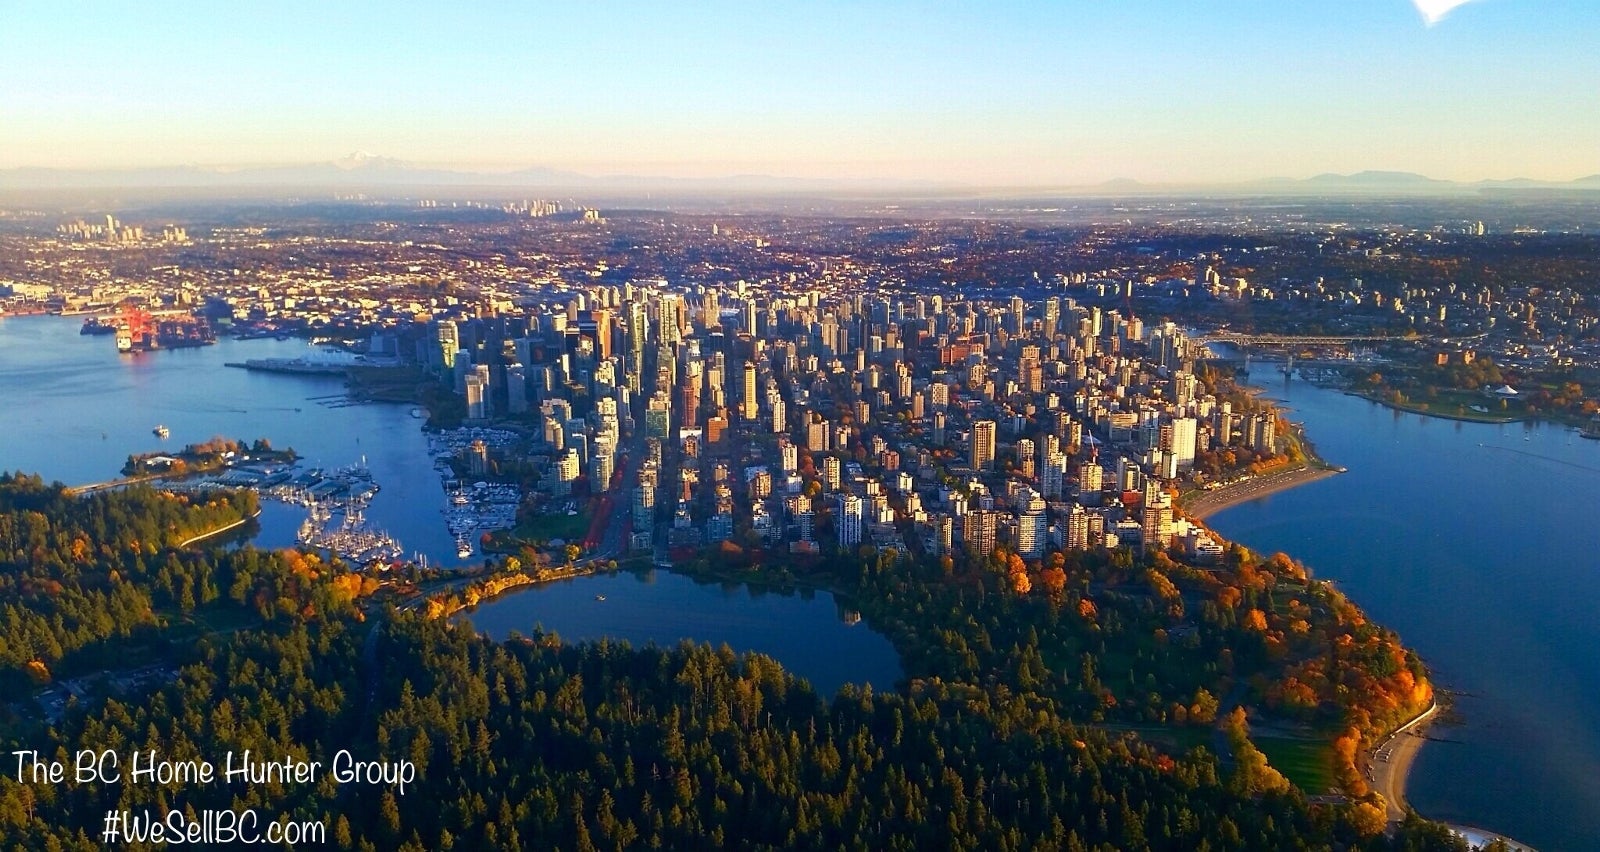 THE BC HOME HUNTER GROUP l AWARD WINNING URBAN & SUBURBAN METRO VANCOUVER l FRASER VALLEY l BC REAL ESTATE EXPERTS 604-767-6736 #BCHOMEHUNTER.COM #BCHH BCHHREALTY.COM #WESELLBC.COM #WELOVEBC.COM #Vancouver #WhiteRock #WestVancouver   #NorthVancouver #Langley #FraserValley #Burnaby #CoalHarbour #Kerrisdale #Kitsilano #PointGrey #Marpole #Dunbar #Oakridge #Coquitlam #EastVan #Yaletown #FraserValleyHomeHunter #VancouverHomeHunter #LynnValley #Lonsdale #VancouverHomeHunter #FraserValleyHomeHunter  @BCHOMEHUNTER  THE BC HOME HUNTER GROUP  AWARD WINNING URBAN & SUBURBAN REAL ESTATE TEAM WITH HEART 604-767-6736  METRO VANCOUVER I FRASER VALLEY I BC  #Vancouver #WhiteRock #SouthSurrey #Starbucks #WestVancouver #Langley #MapleRidge #NorthVancouver #Langley #FraserValley #Burnaby #FortLangley #PittMeadows #Delta #Richmond #CoalHarbour #Surrey #Abbotsford #FraserValley #Kerrisdale #Cloverdale #Coquitlam #EastVan #Richmond #PortMoody #Yaletown #CrescentBeach #BCHHREALTY #MorganCreek #PortMoody #Burnaby #WeLoveBC #OceanPark #FraserValleyHomeHunter #VancouverHomeHunter #surreyhomehunter #southsurreyhomehunter #morganheightshomehunter #abbotsfordhomehunter #squamishhomehunter #whistlerhomehunter #portcoquitlamhomehunter #yaletownhomehunter #eastvancouverhomehunter #chilliwackhomehunter #okanaganhomehunter #islandhomehunter #canadianhomehunter #canadahomehunter #fixeruppercanada #fixeruppervancouver #604life #welovebc #wesellbc #urbansuburbanhomehunter #urbanhomehunter #suburbanhomehunter #sunshinecoasthomehunter #townhomehunter #condohomehunter #waterfronthomehunter #resorthomehunter #fraservalleysold #whiterocksold #langleysold #northvansold #westvansold #vancouverhomelove #okanagansold #bcrealtorsold #bchomelove #bchhrealty #vancouverhomelove #oceanparkhomehunter #grandviewhomehunter #crescentbeachhomehunter #bchomehunter